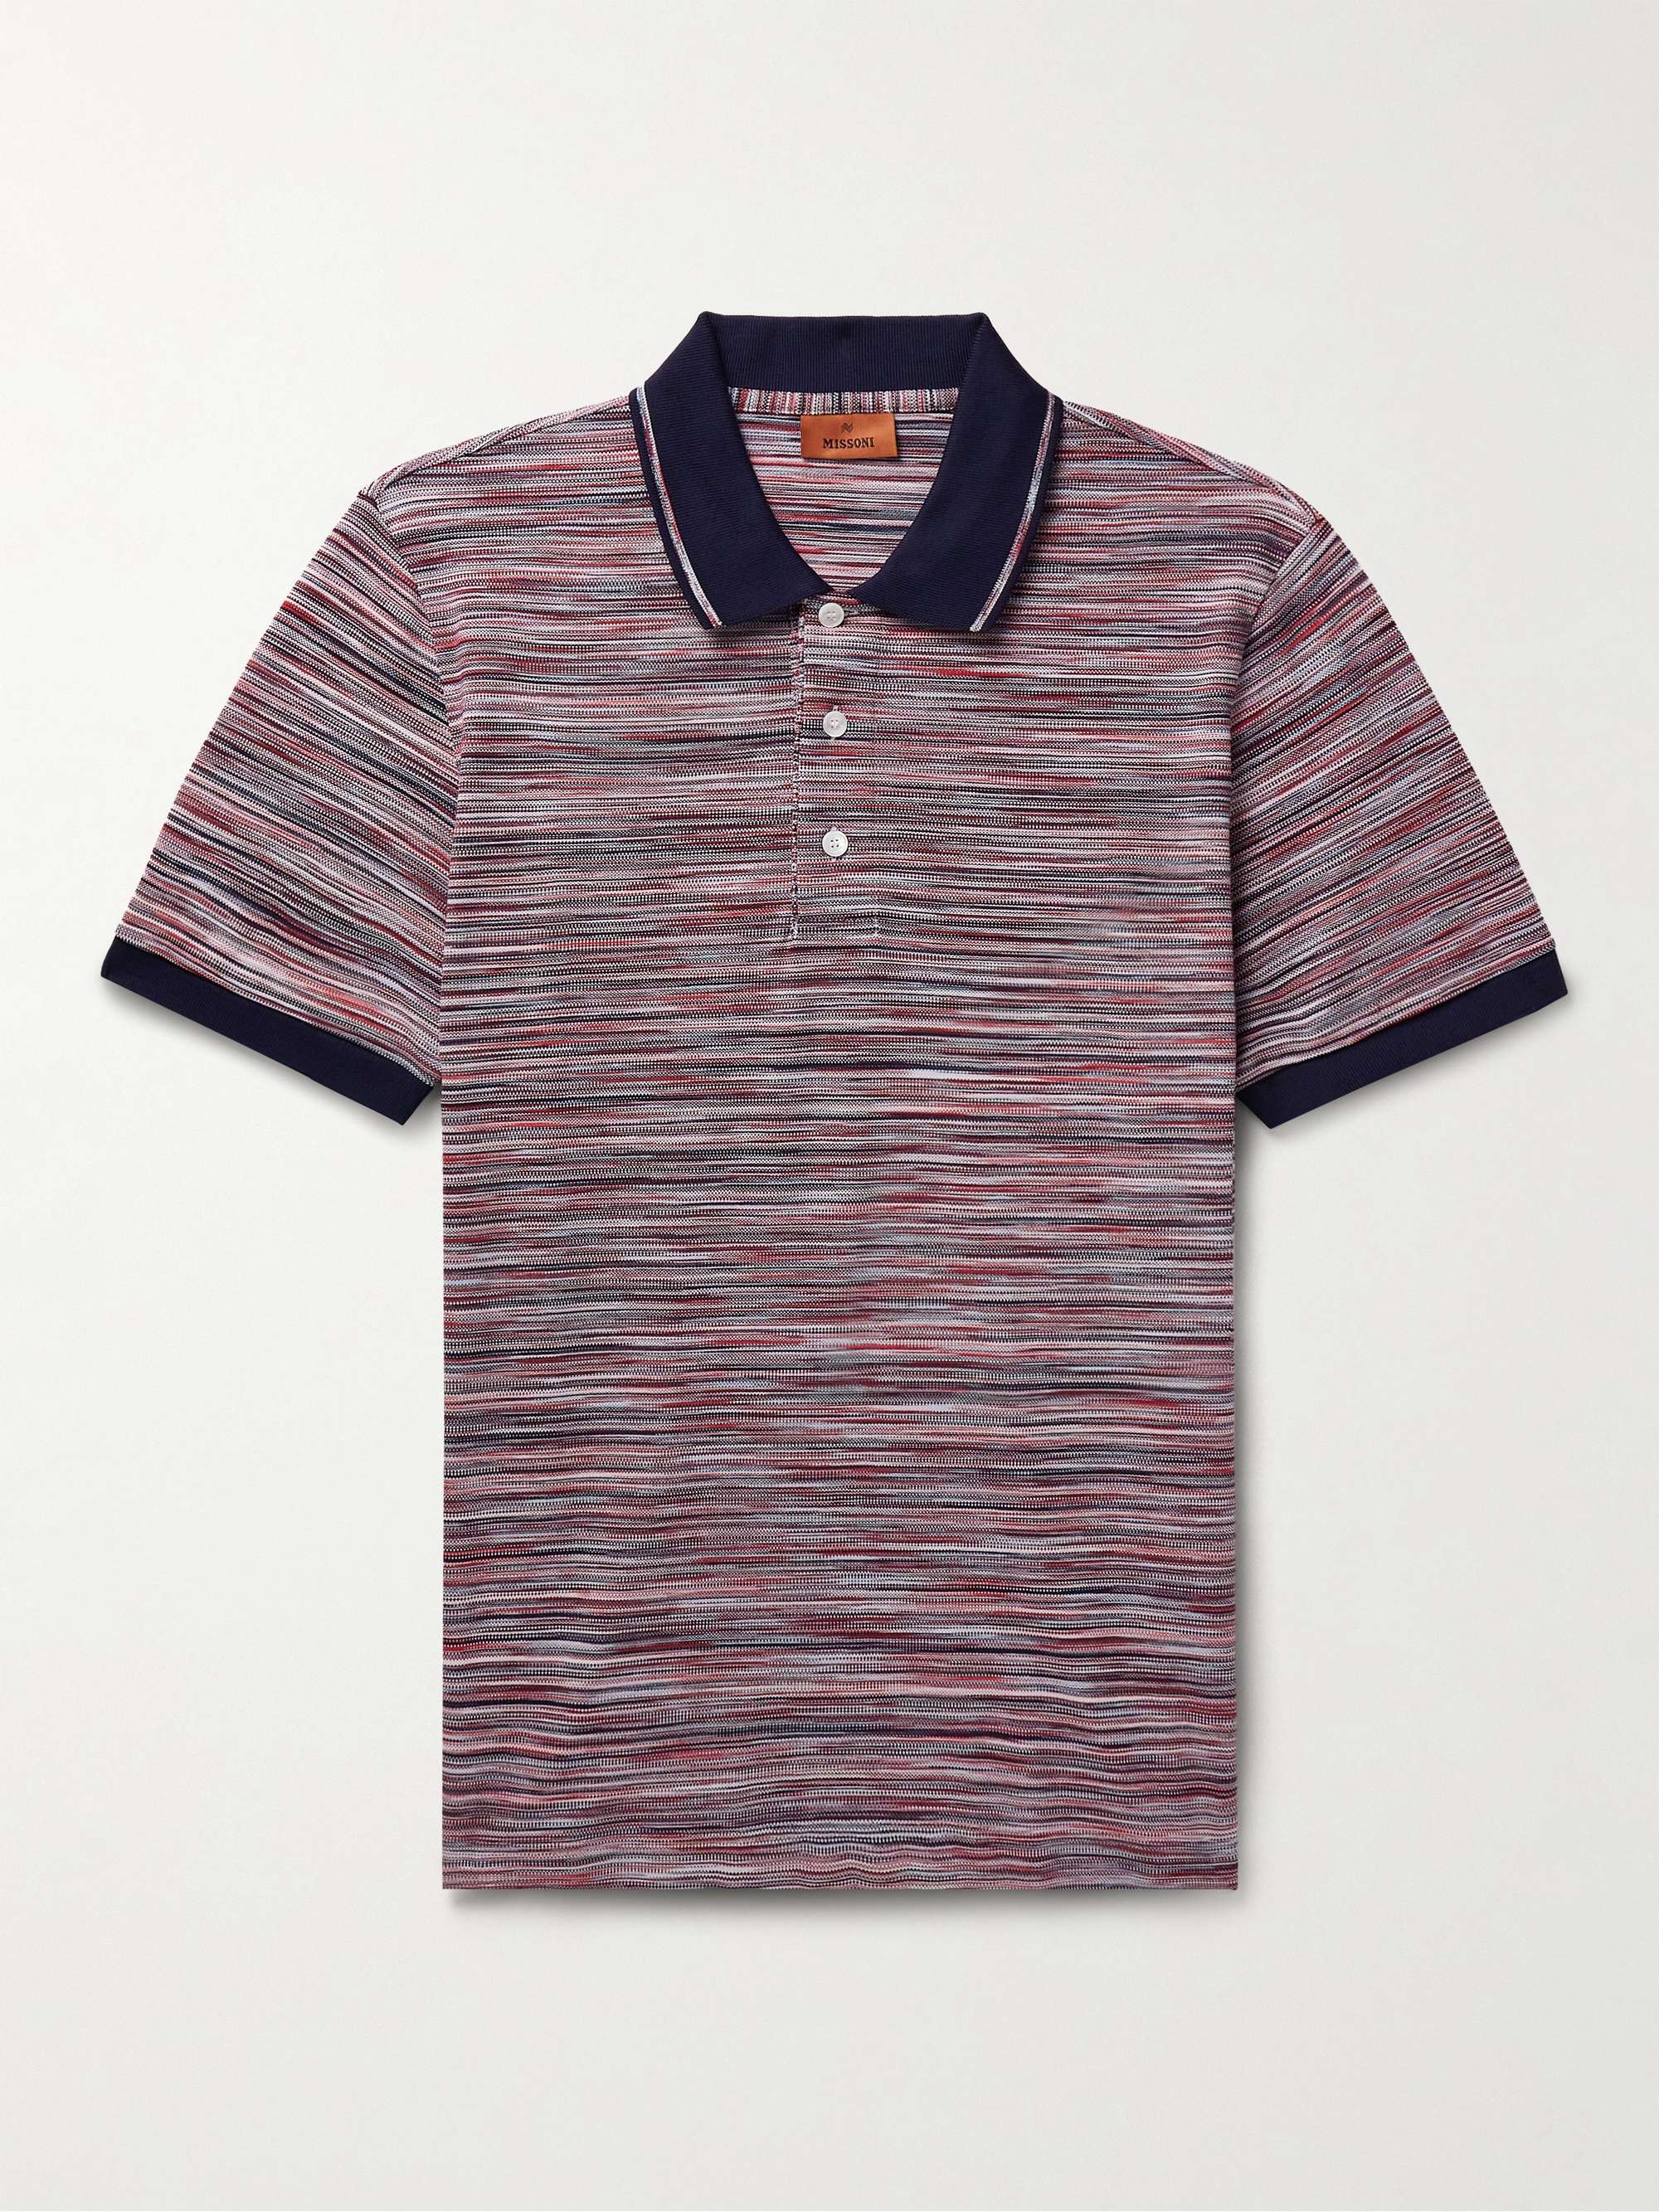 MISSONI Space-Dyed Cotton-Piqué Polo Shirt for Men | MR PORTER